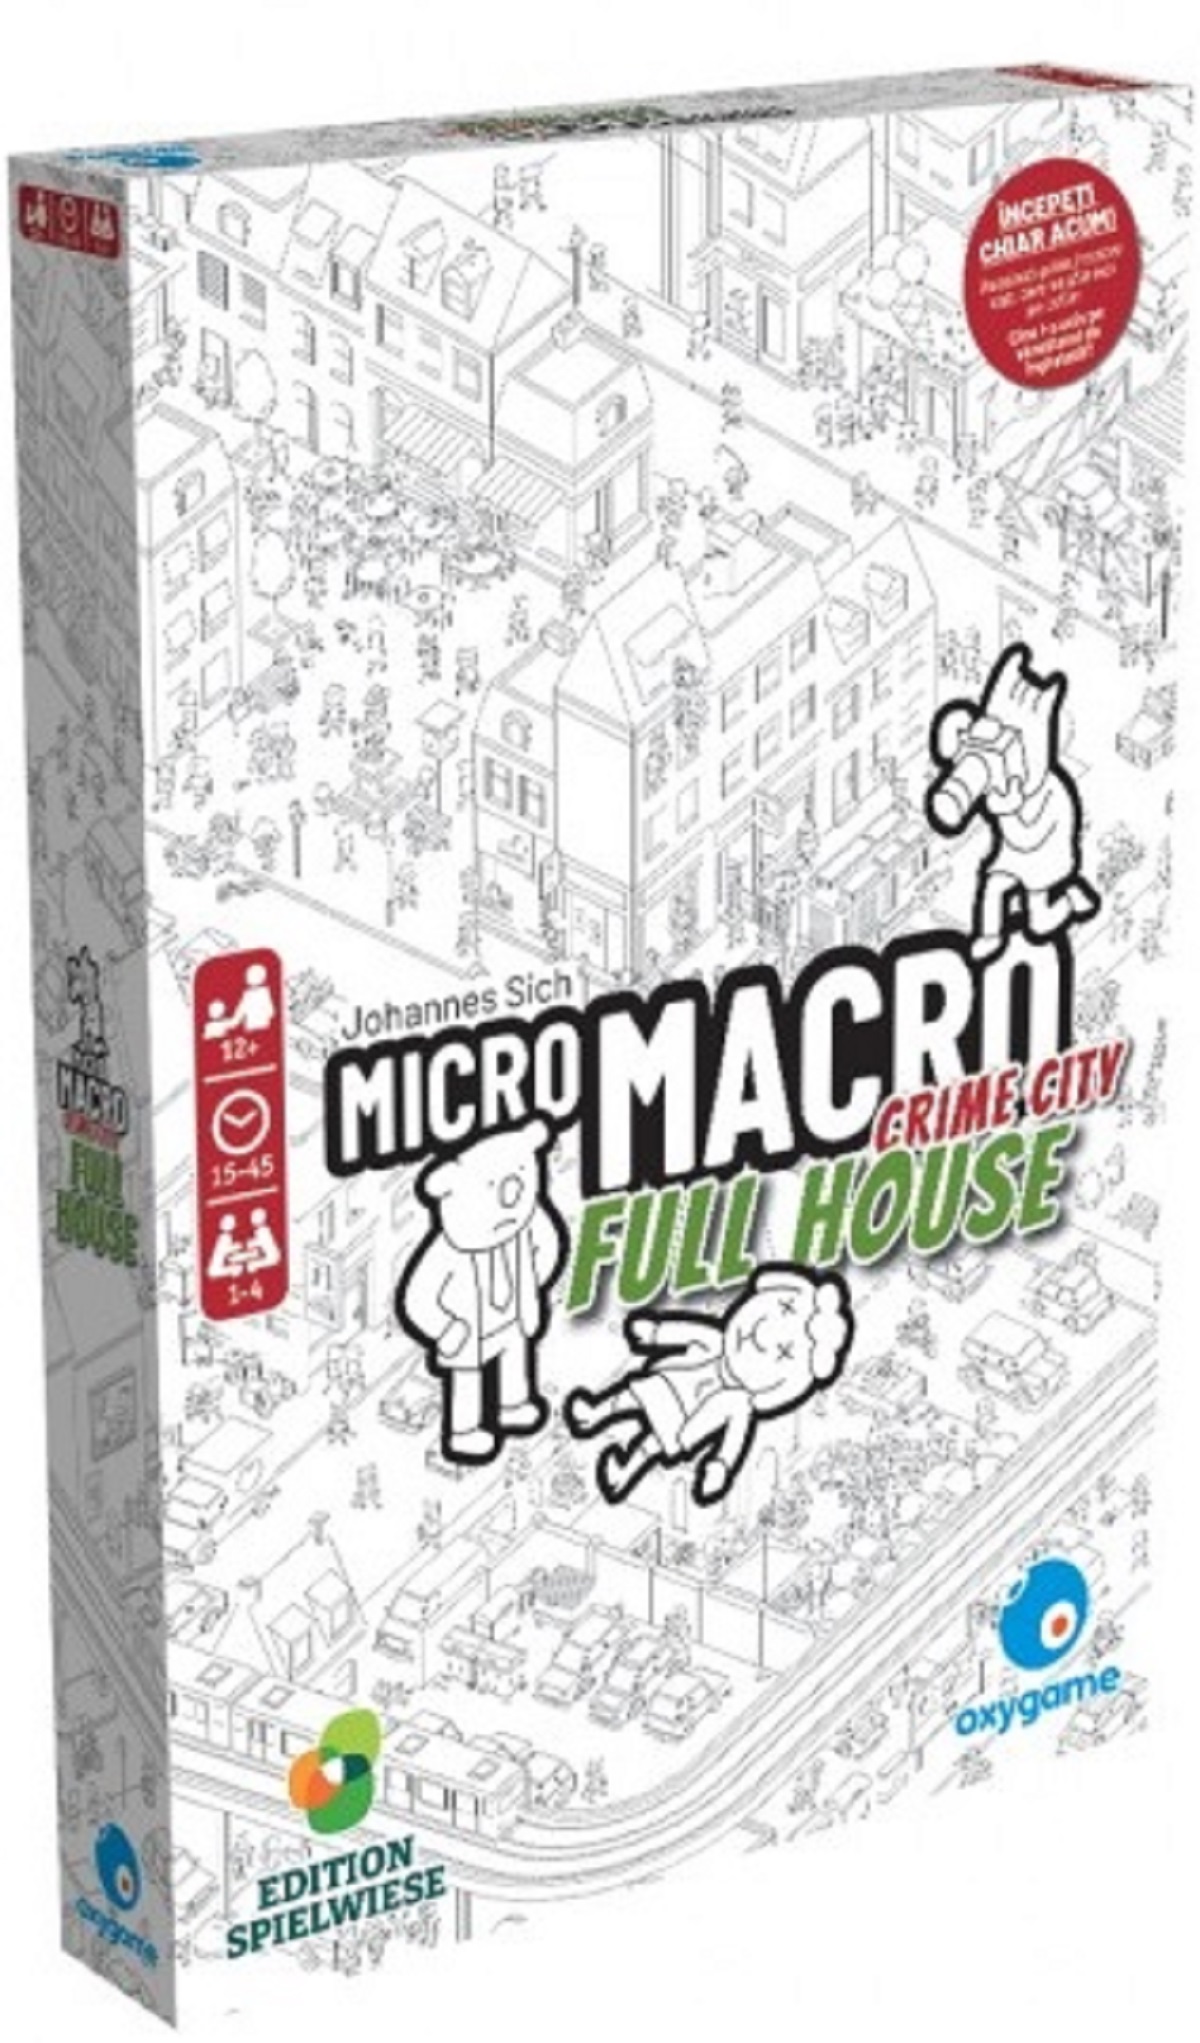 Micromacro: Crime City. Full House